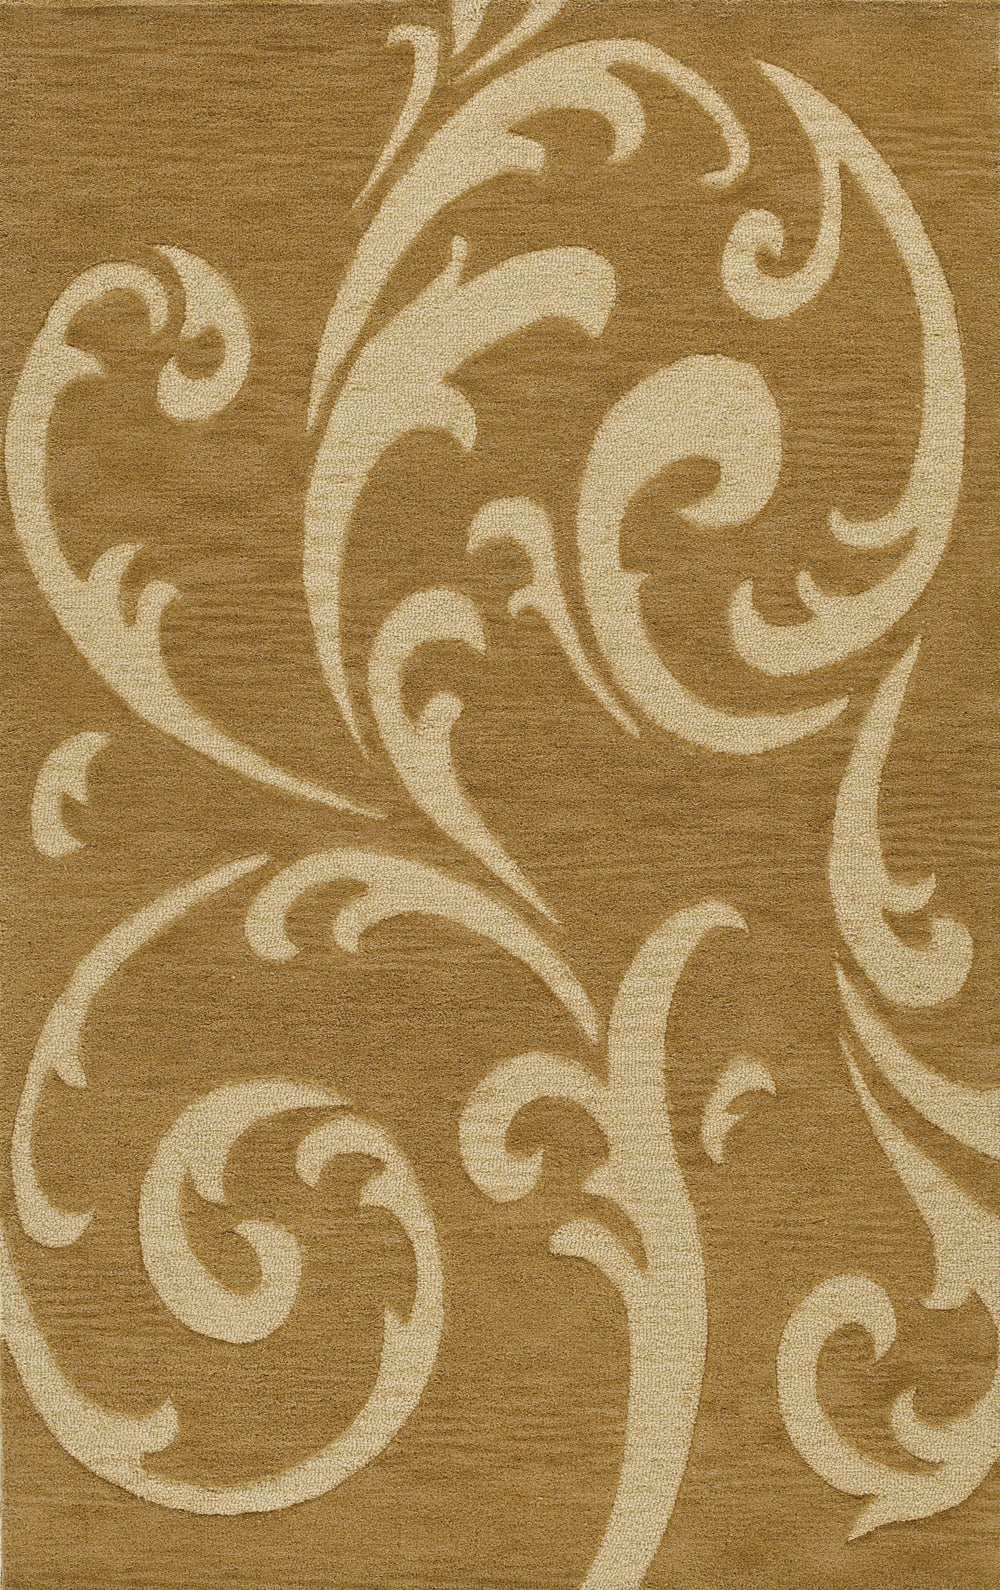 Persian Veronica Grey Scroll Traditional Area Rugs Carpet 2x3 2x7 3x5 5x7 8x10 